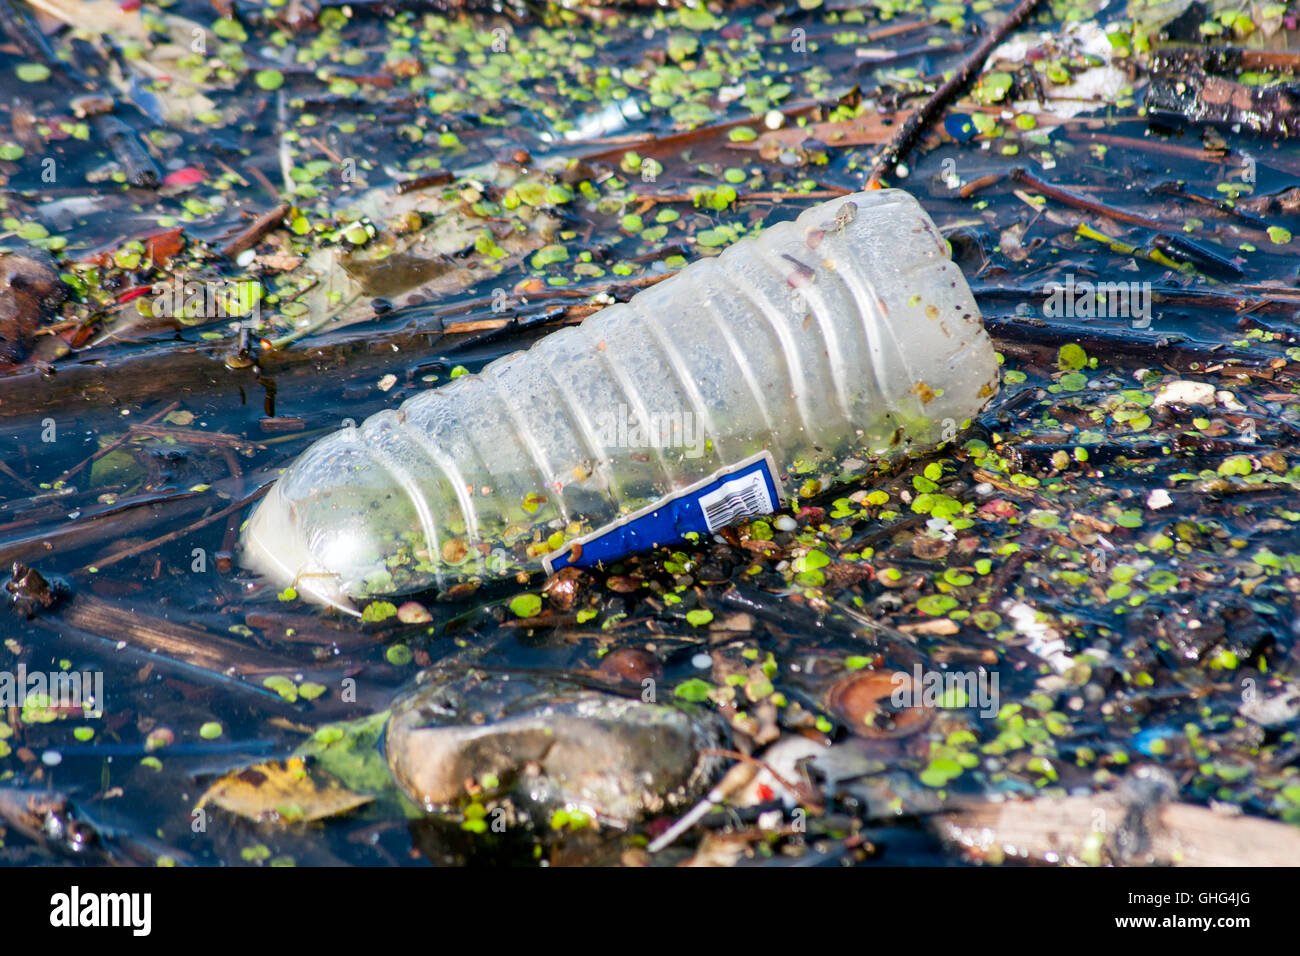 Empty Plastic Bottle Pollutes Waterway Stock Photo